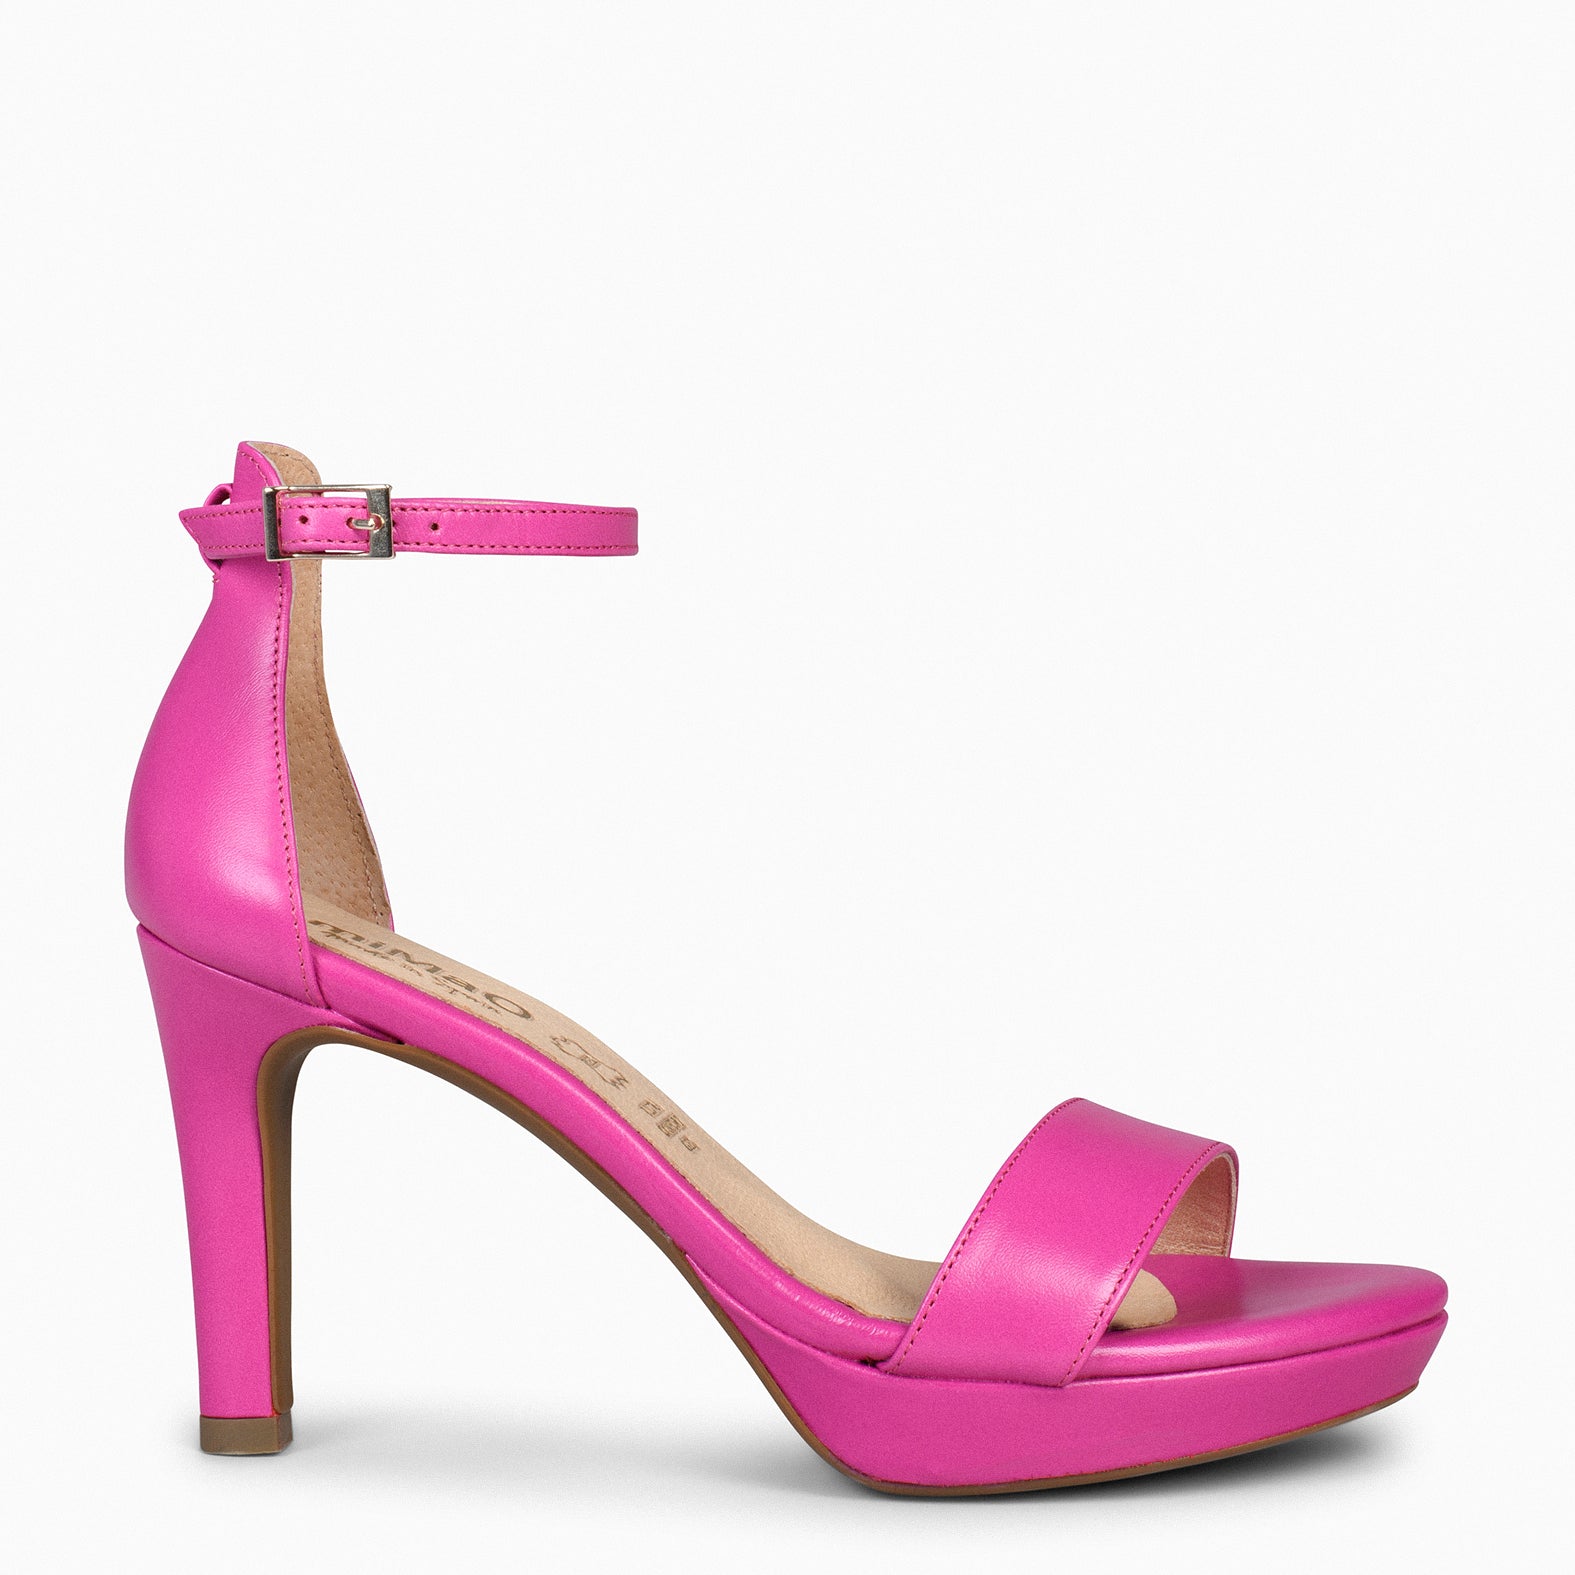 PARTY – PINK high-heeled platform sandals